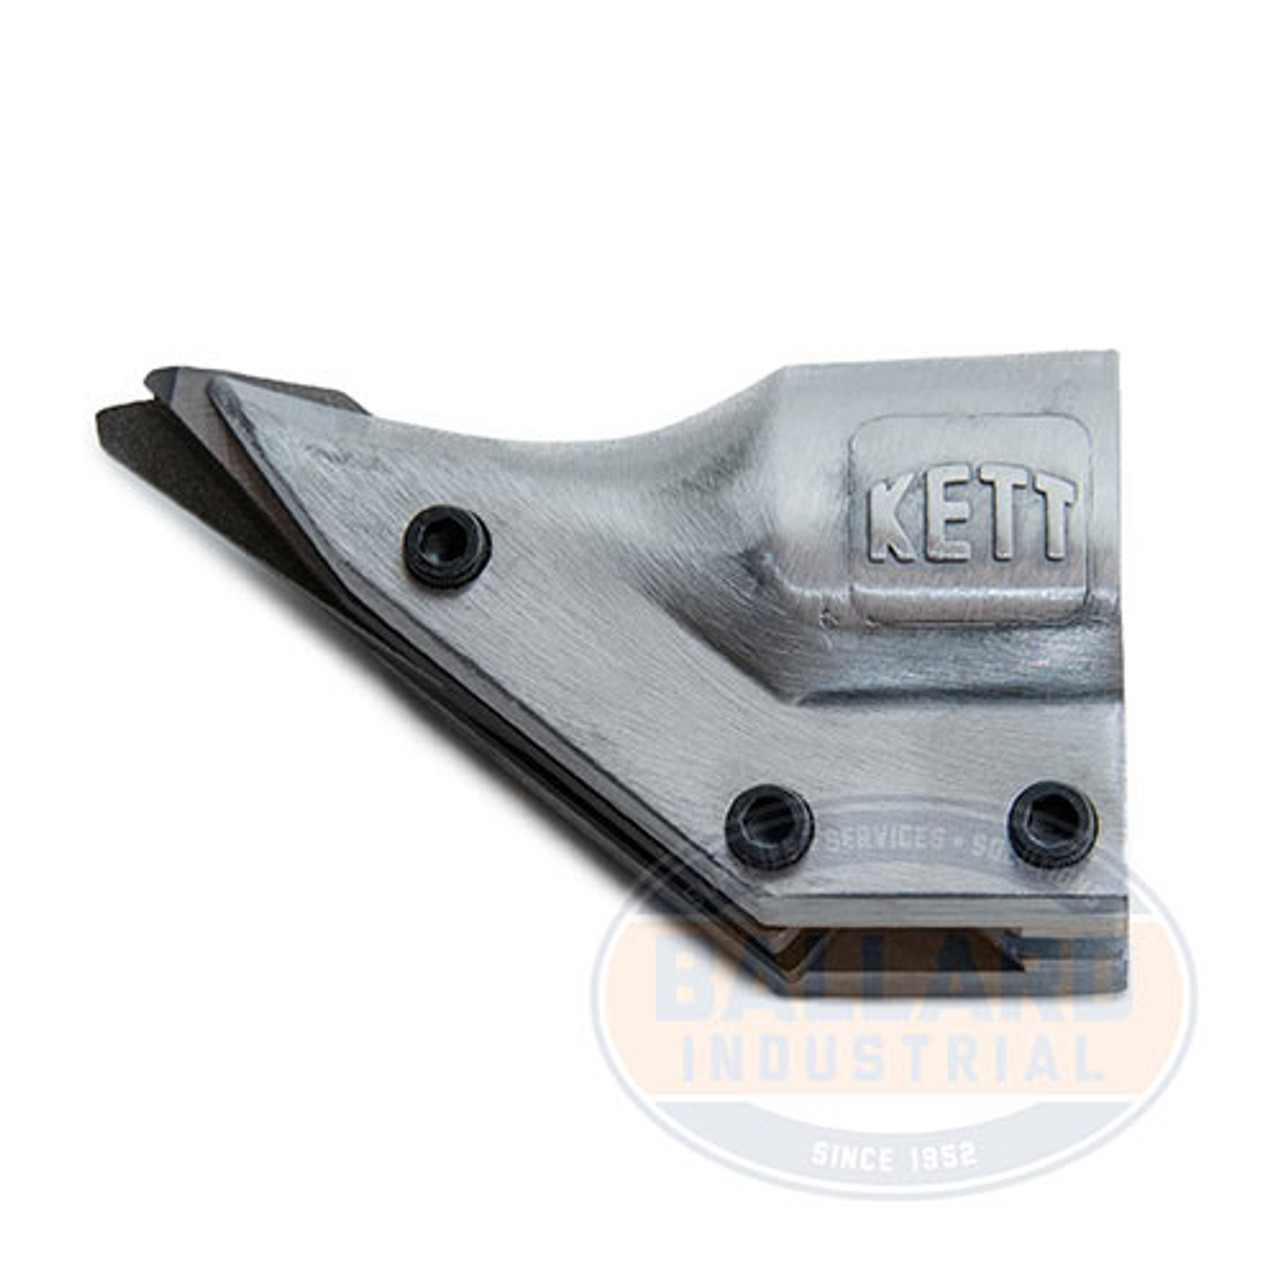 Kett Metal Shears - Double Cut 18 Gauge KD-400 (20 Gauge Stainless)